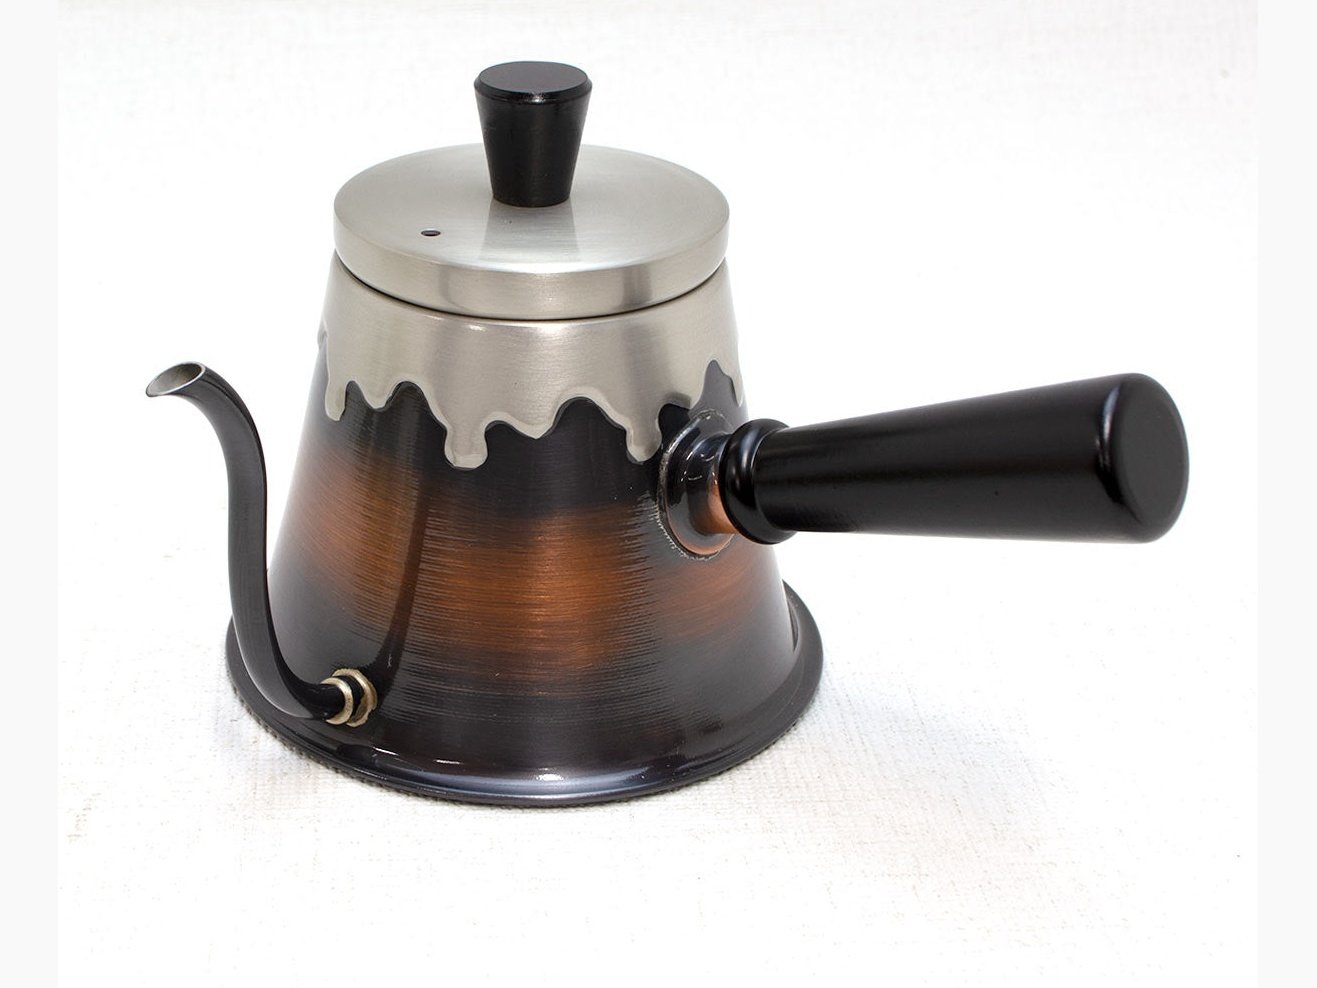 Shinko MtFuji Drip Pot Kettle with Side Handle 380ml